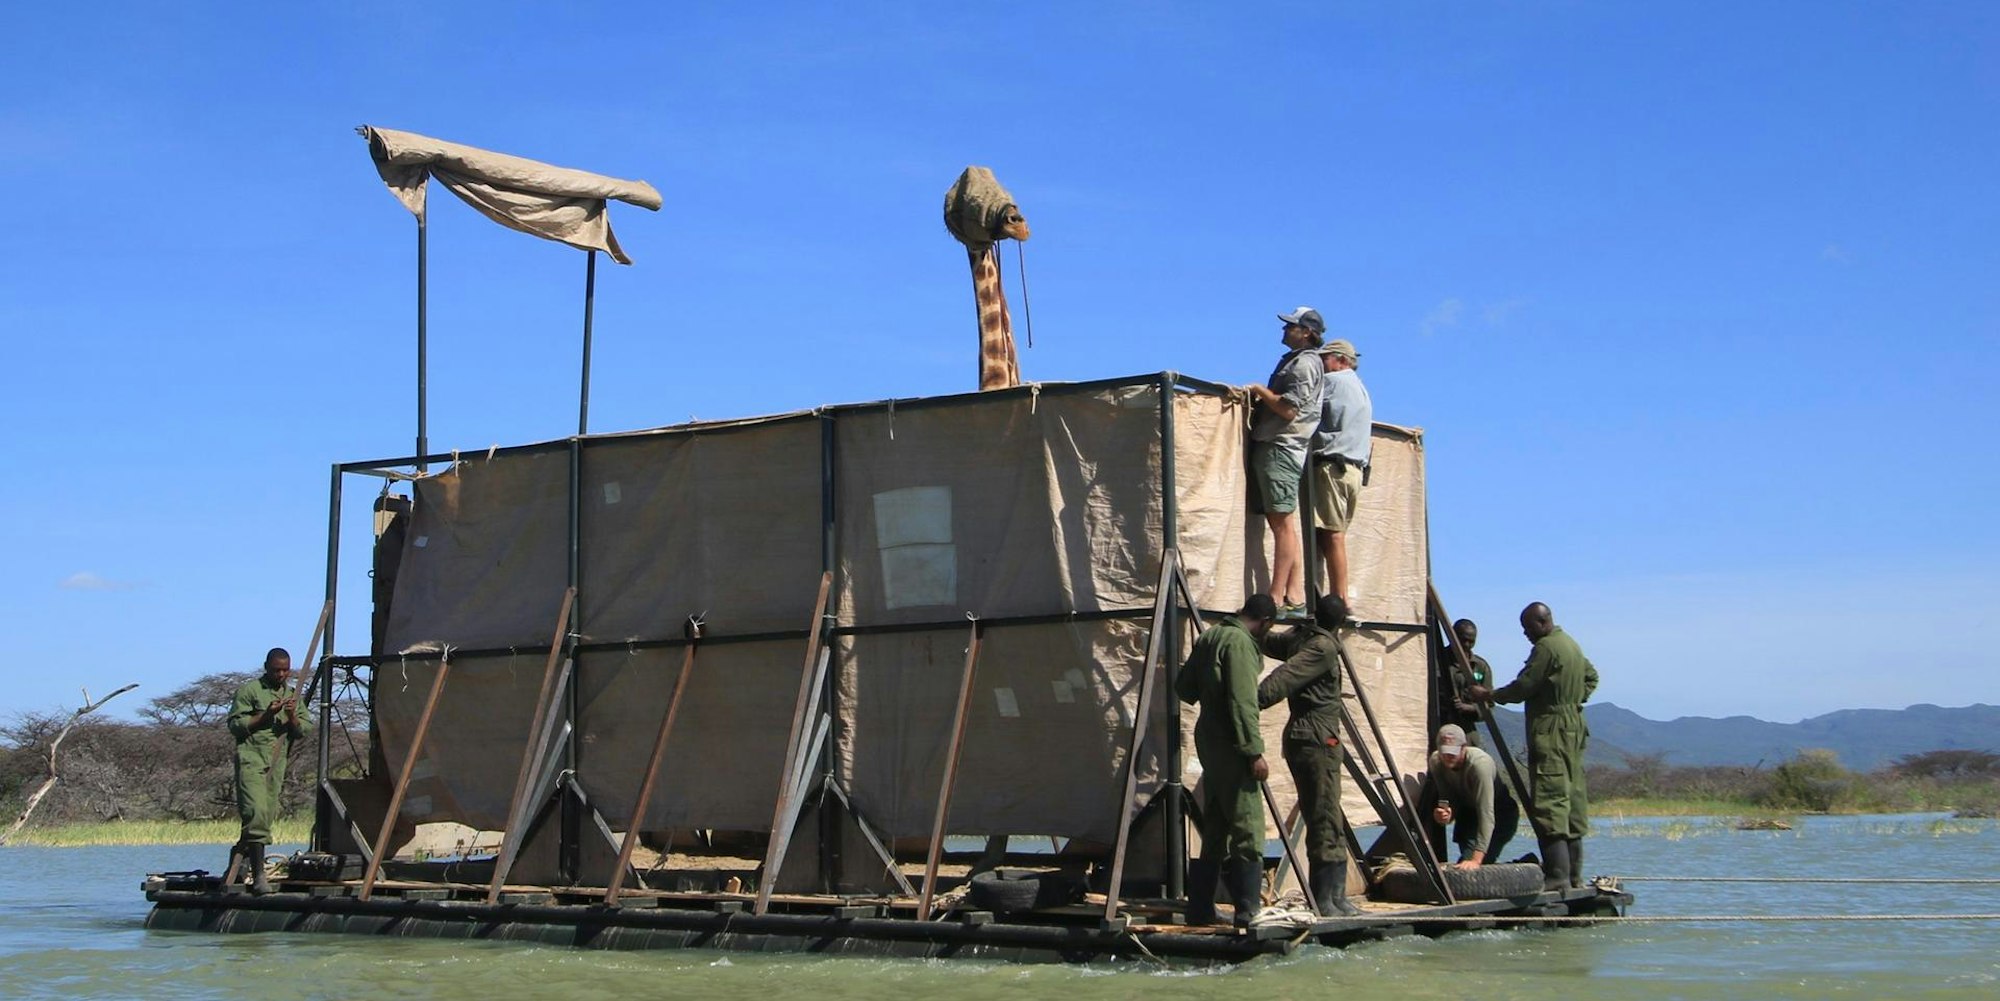 Giraffe im Boot